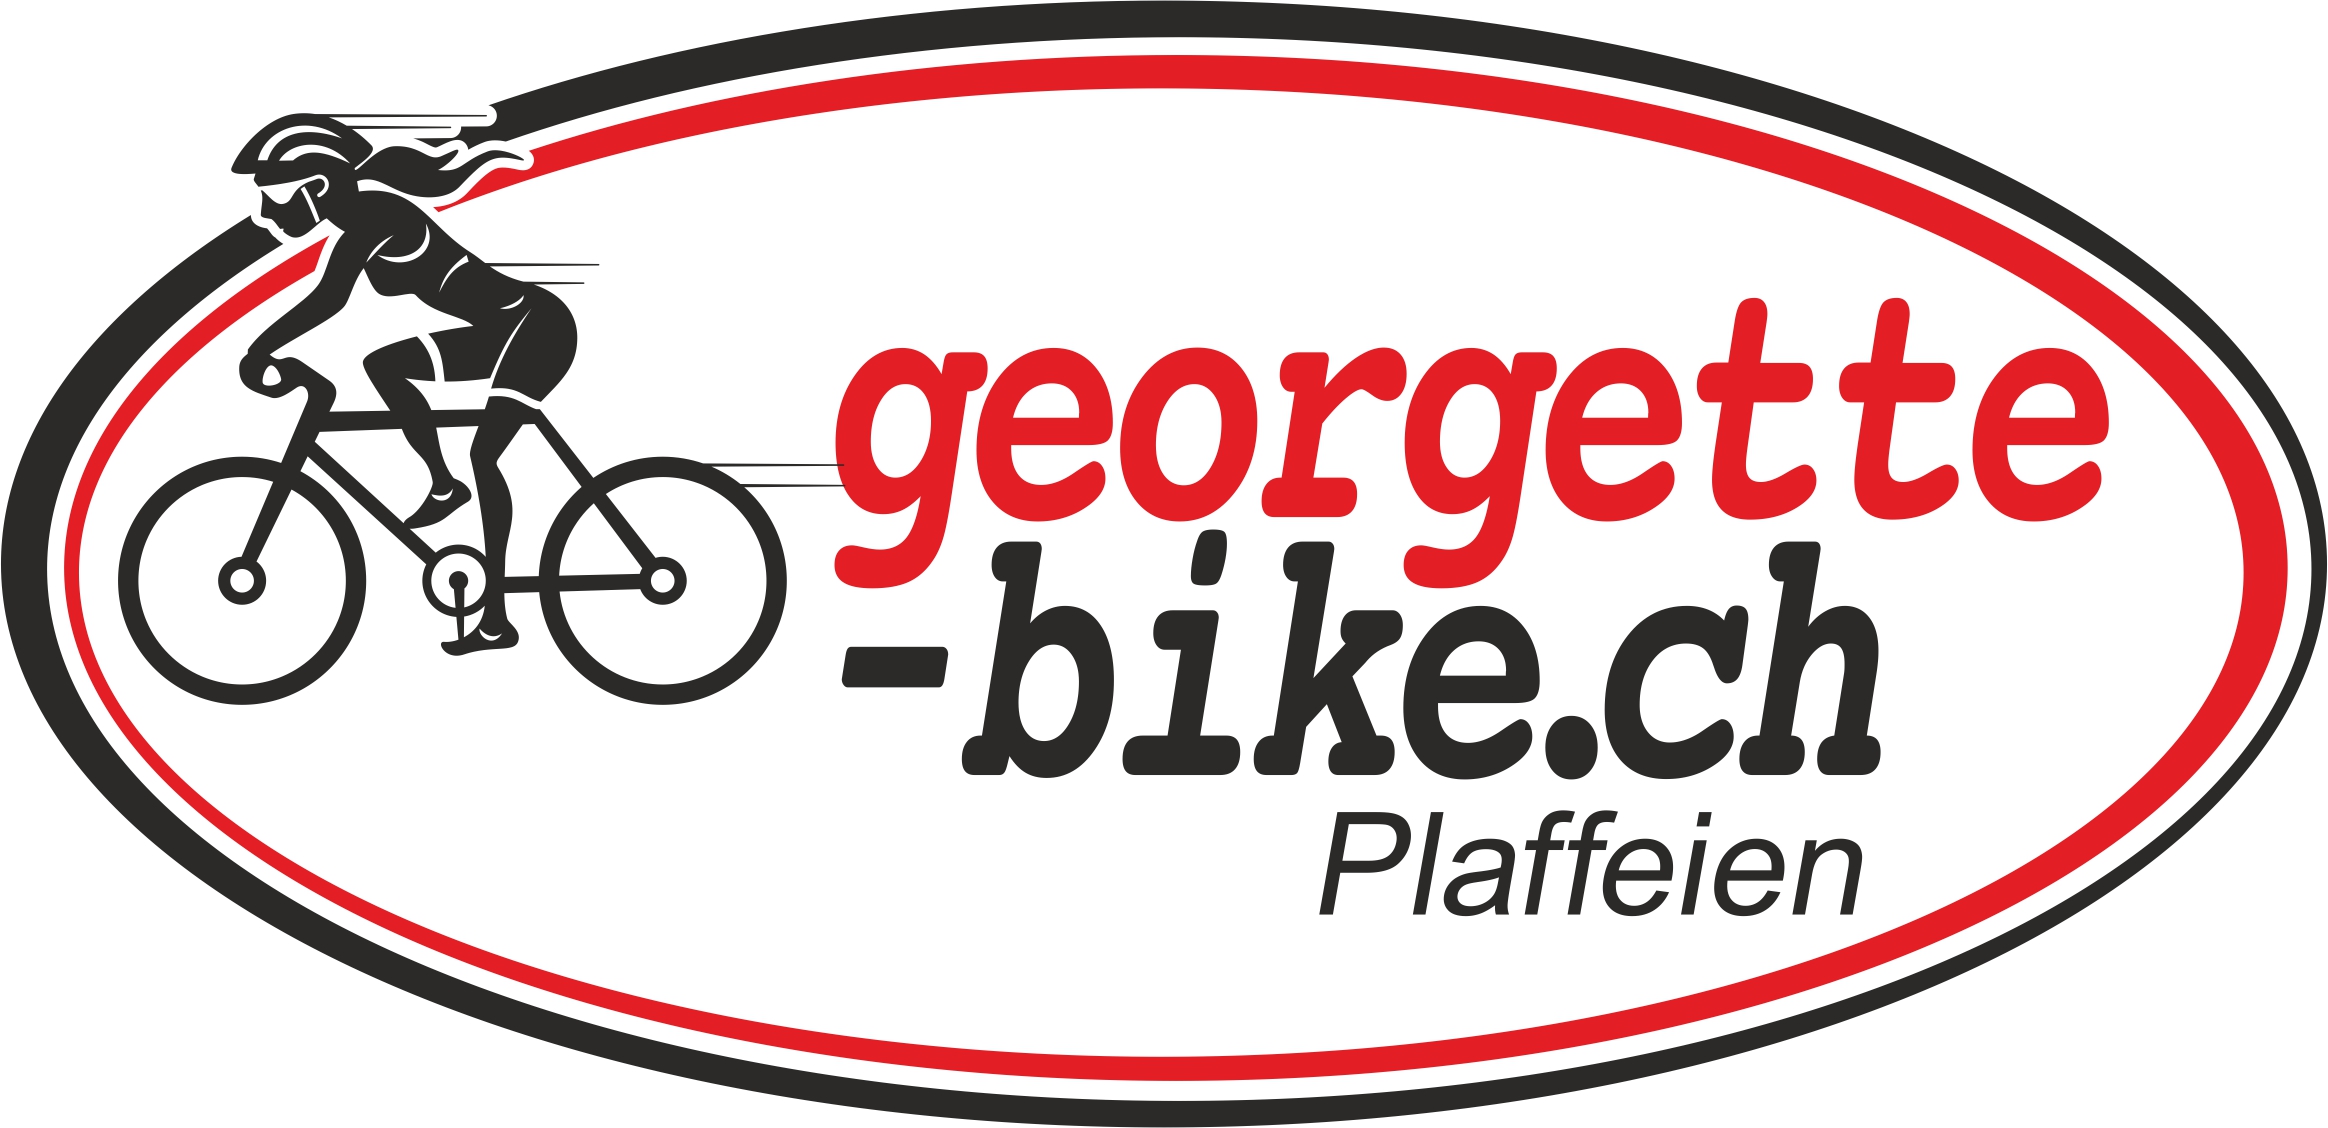 (c) Georgette-bike.ch